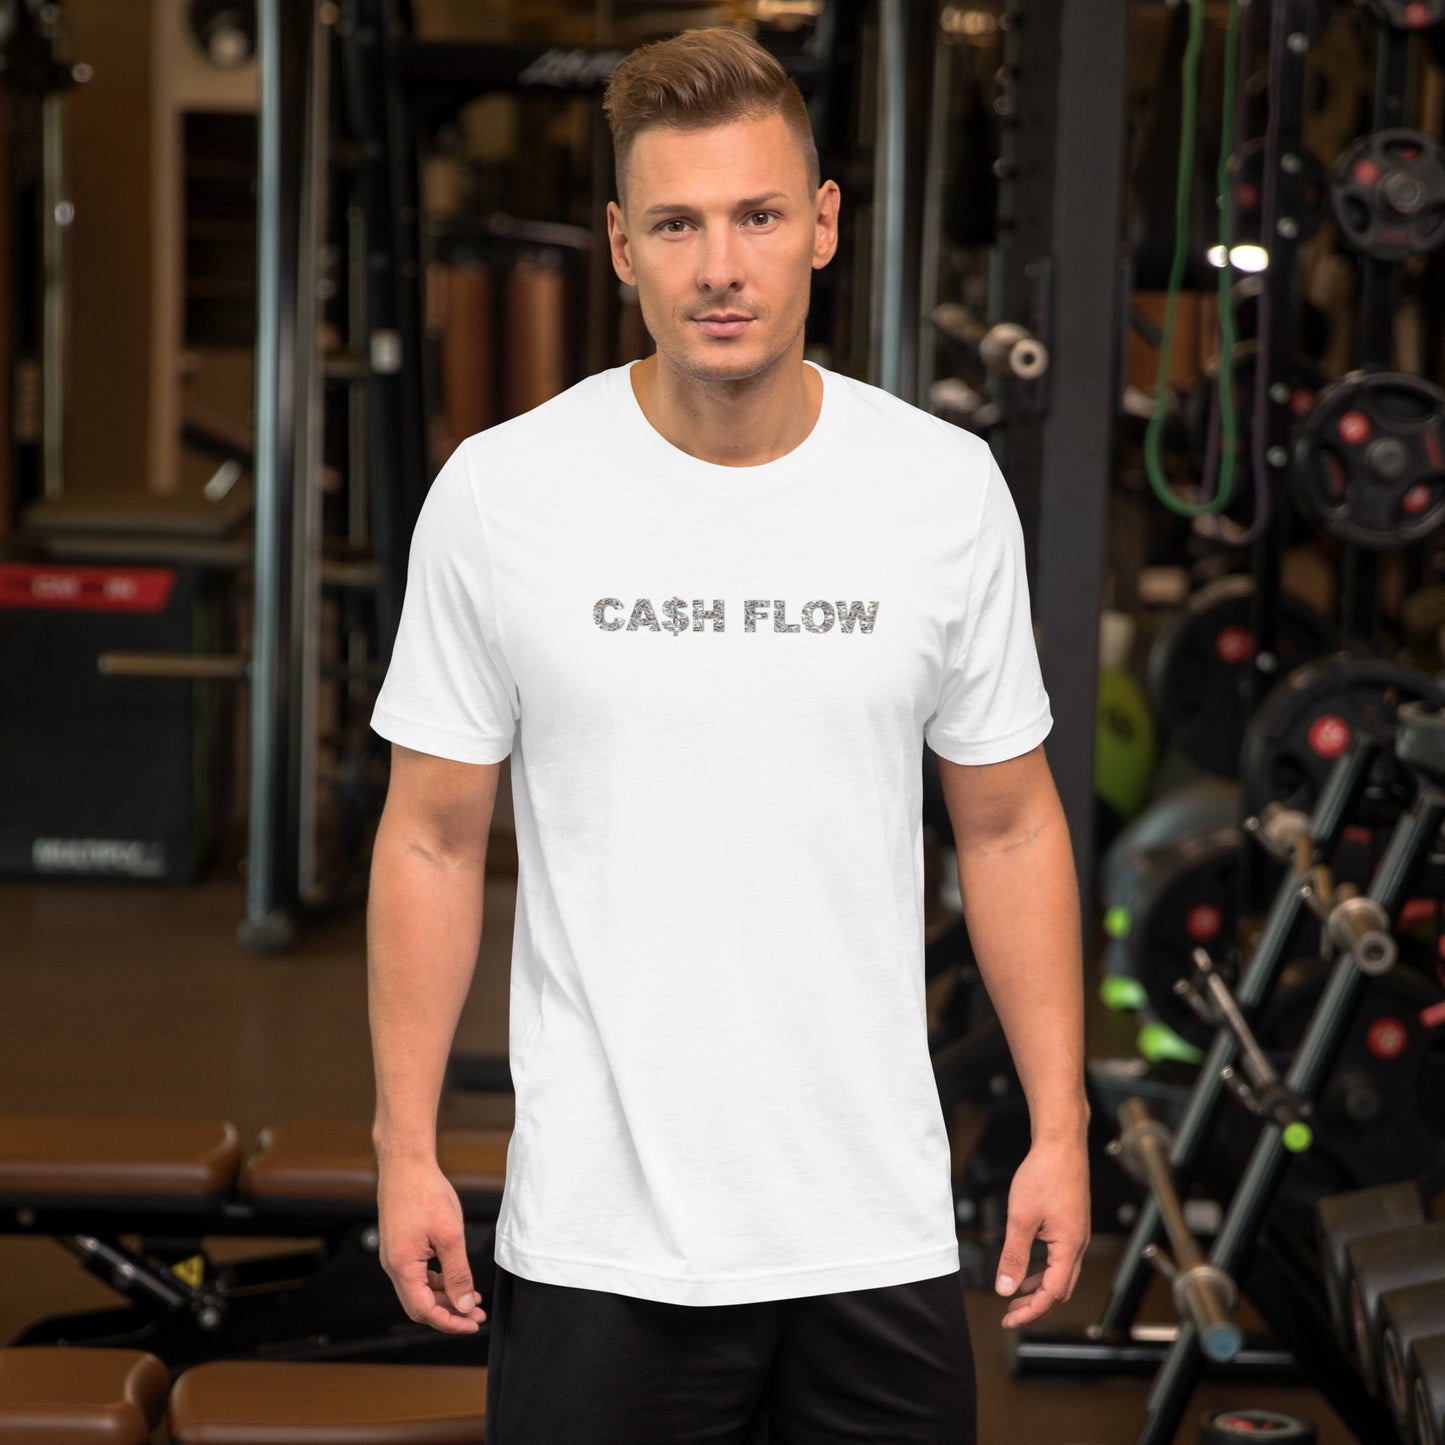 CA$H FLOW - Money Background - T-Shirt